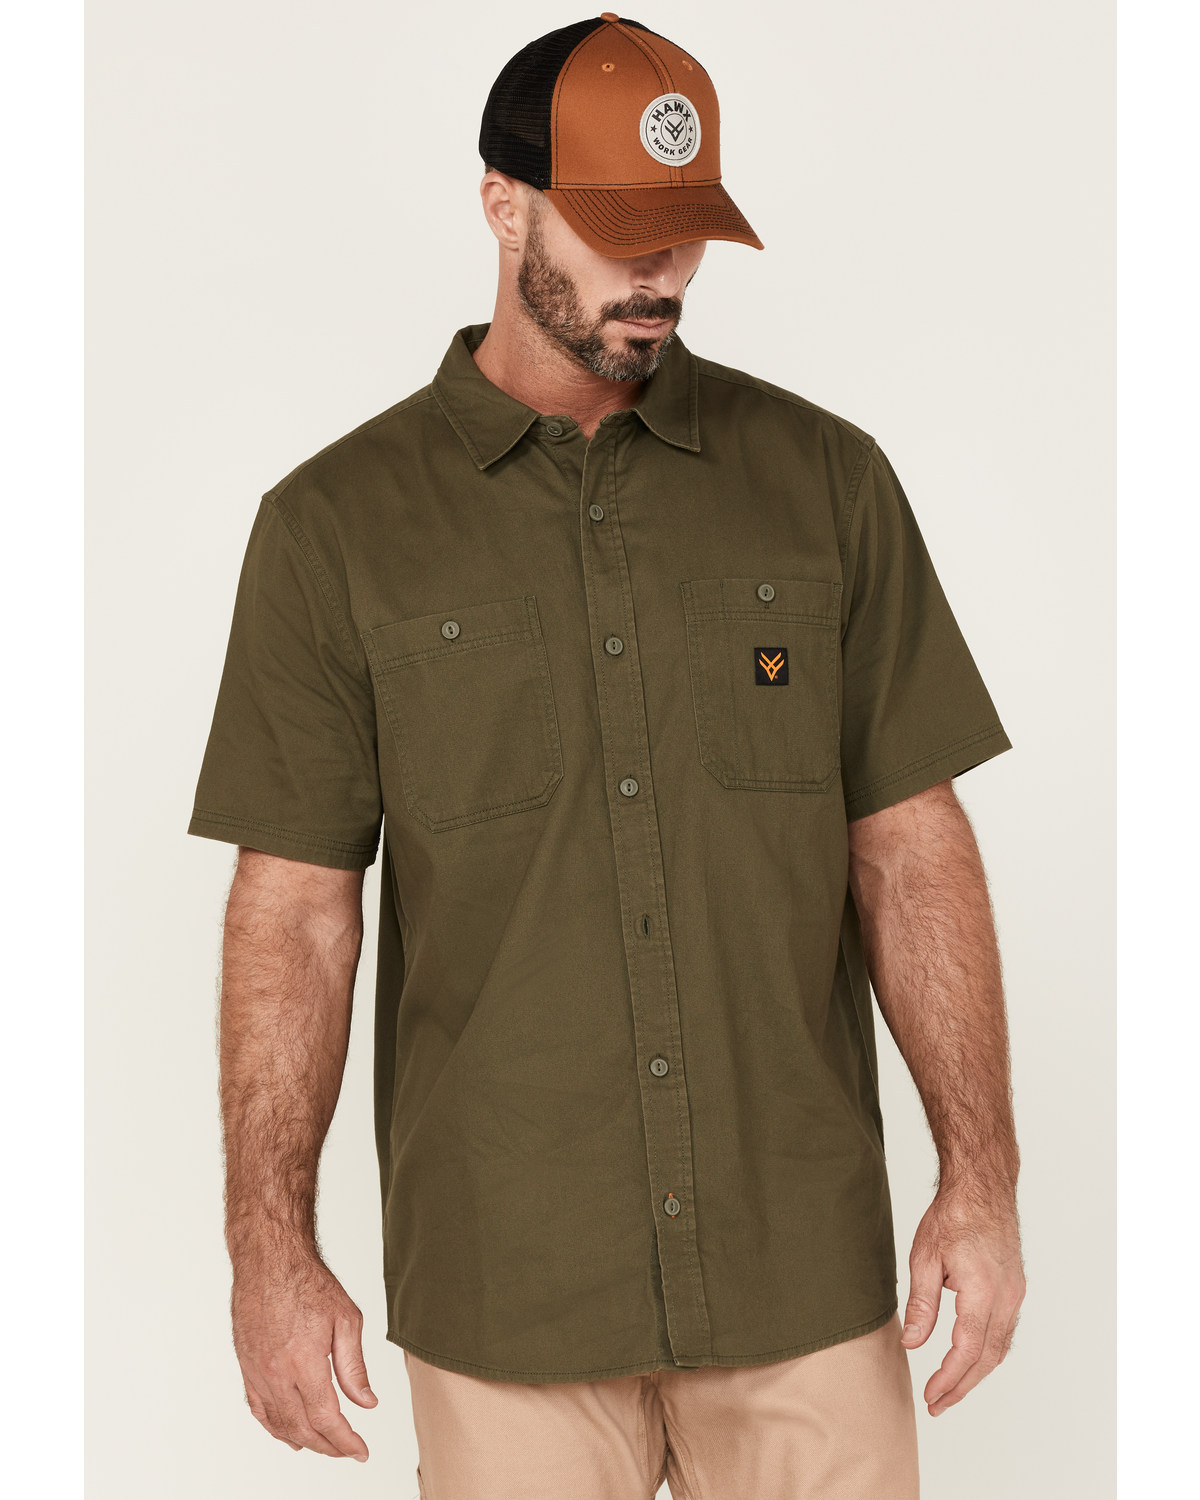 Hawx Men's Solid Twill Short Sleeve Button-Down Work Shirt